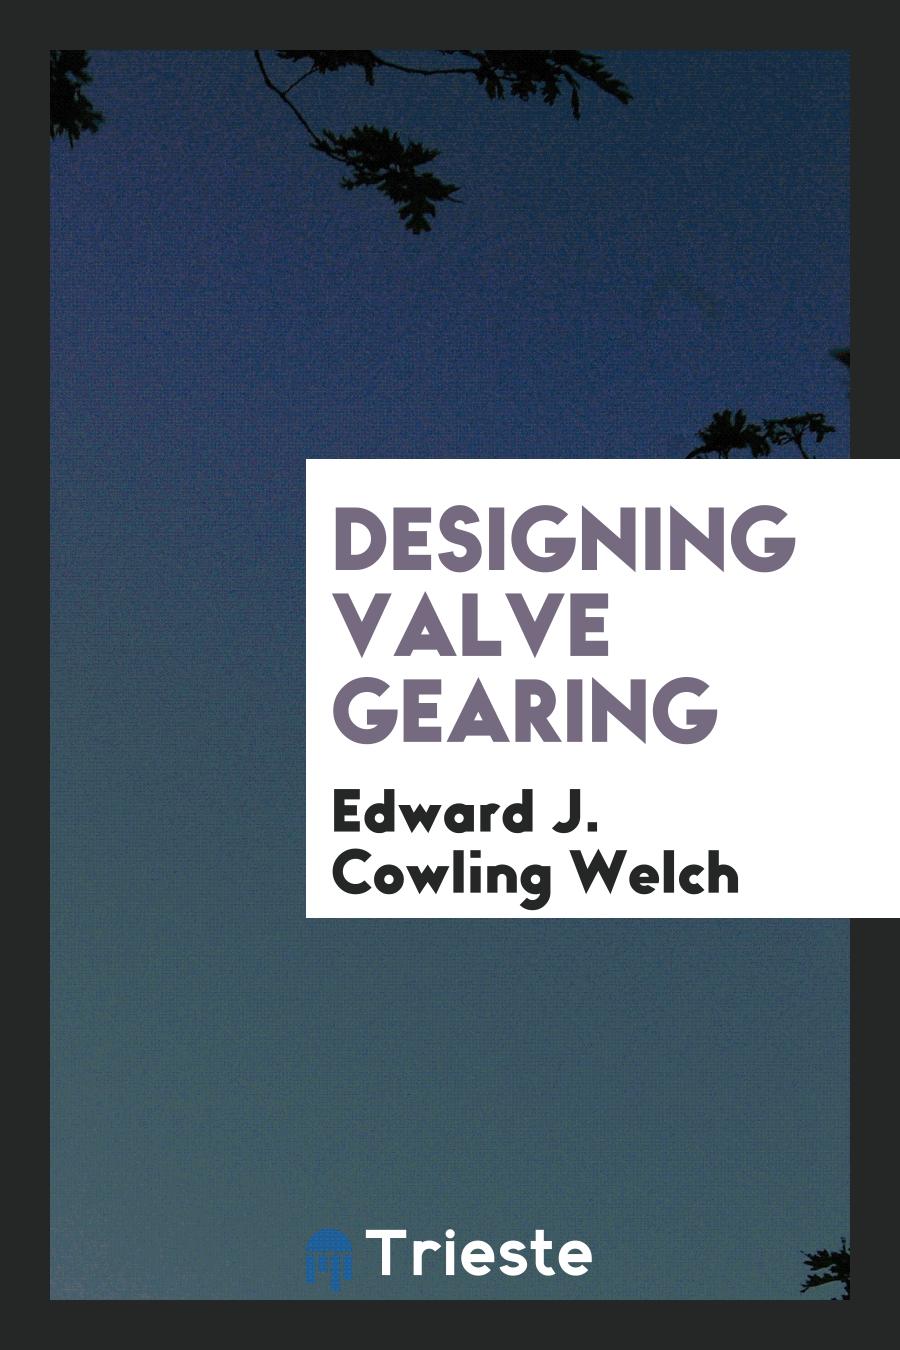 Edward J. Cowling Welch - Designing Valve Gearing